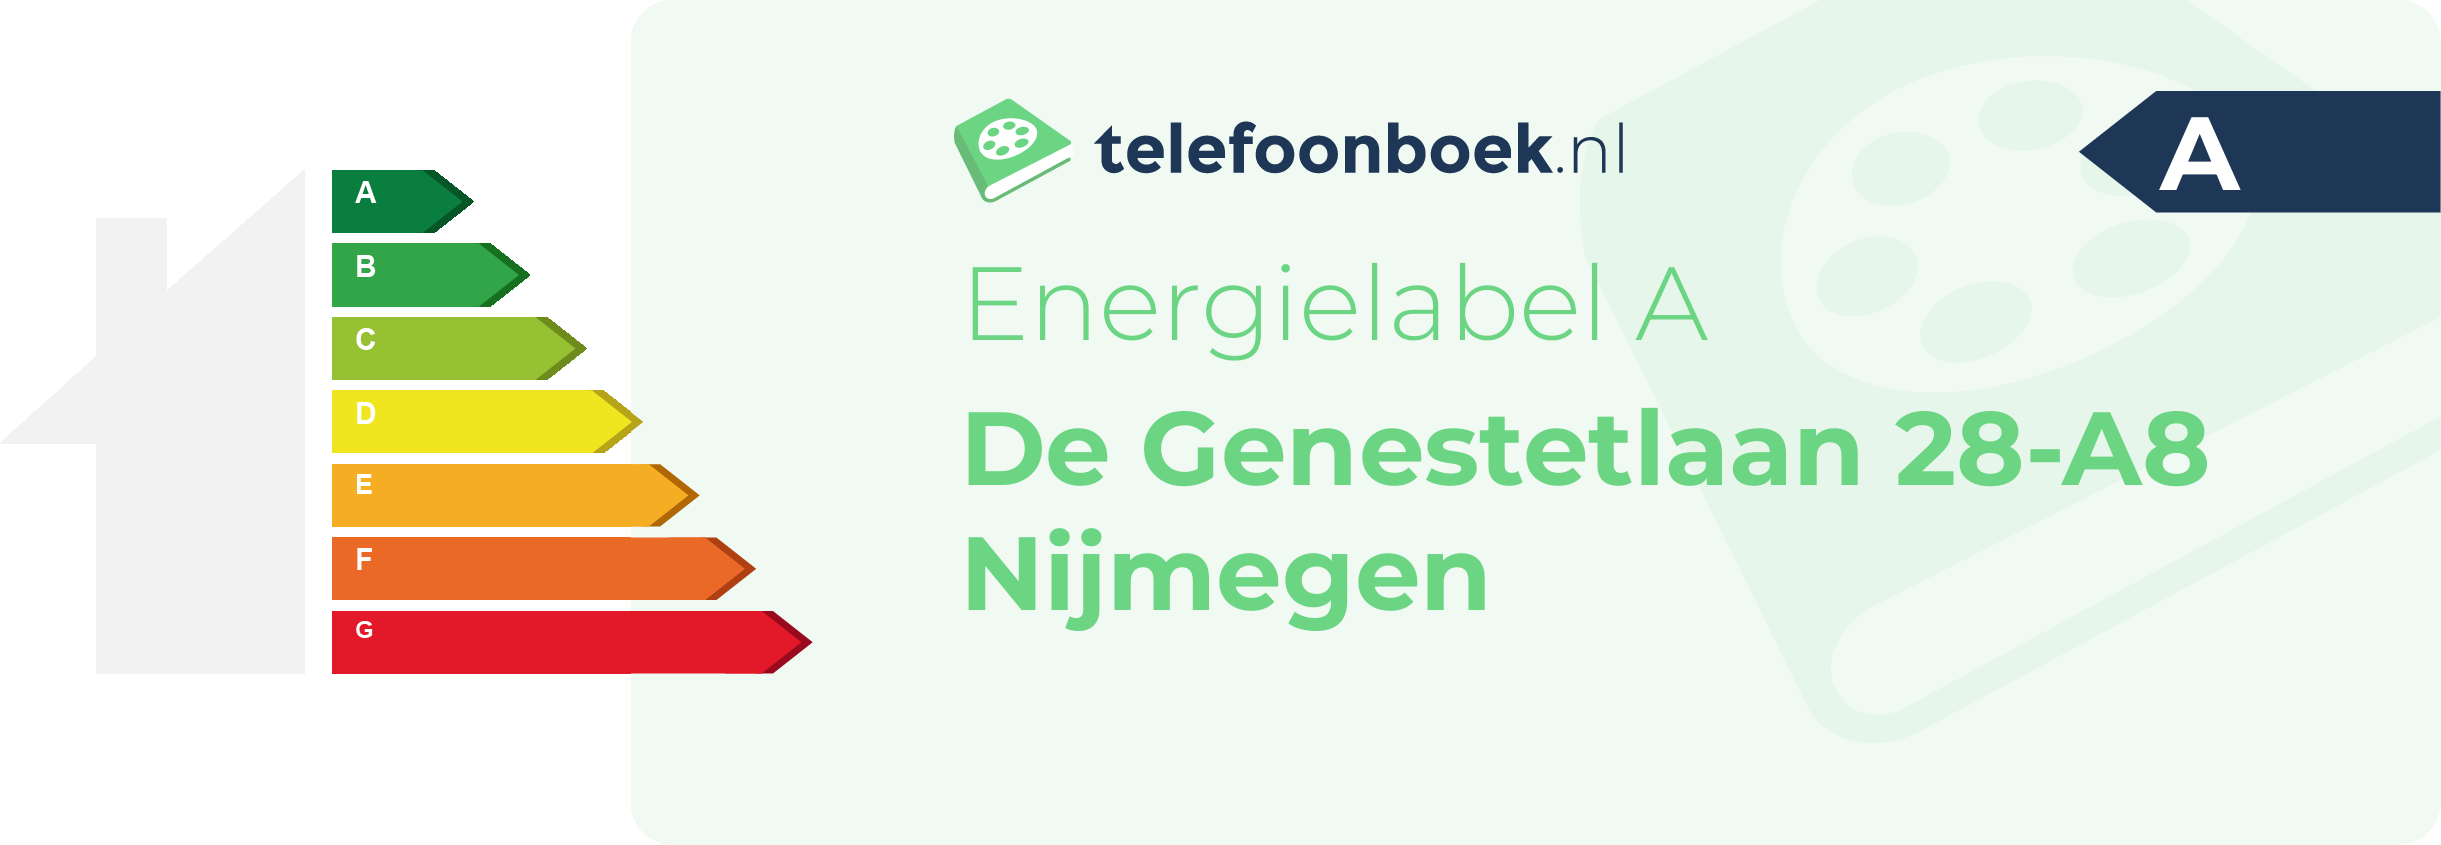 Energielabel De Genestetlaan 28-A8 Nijmegen